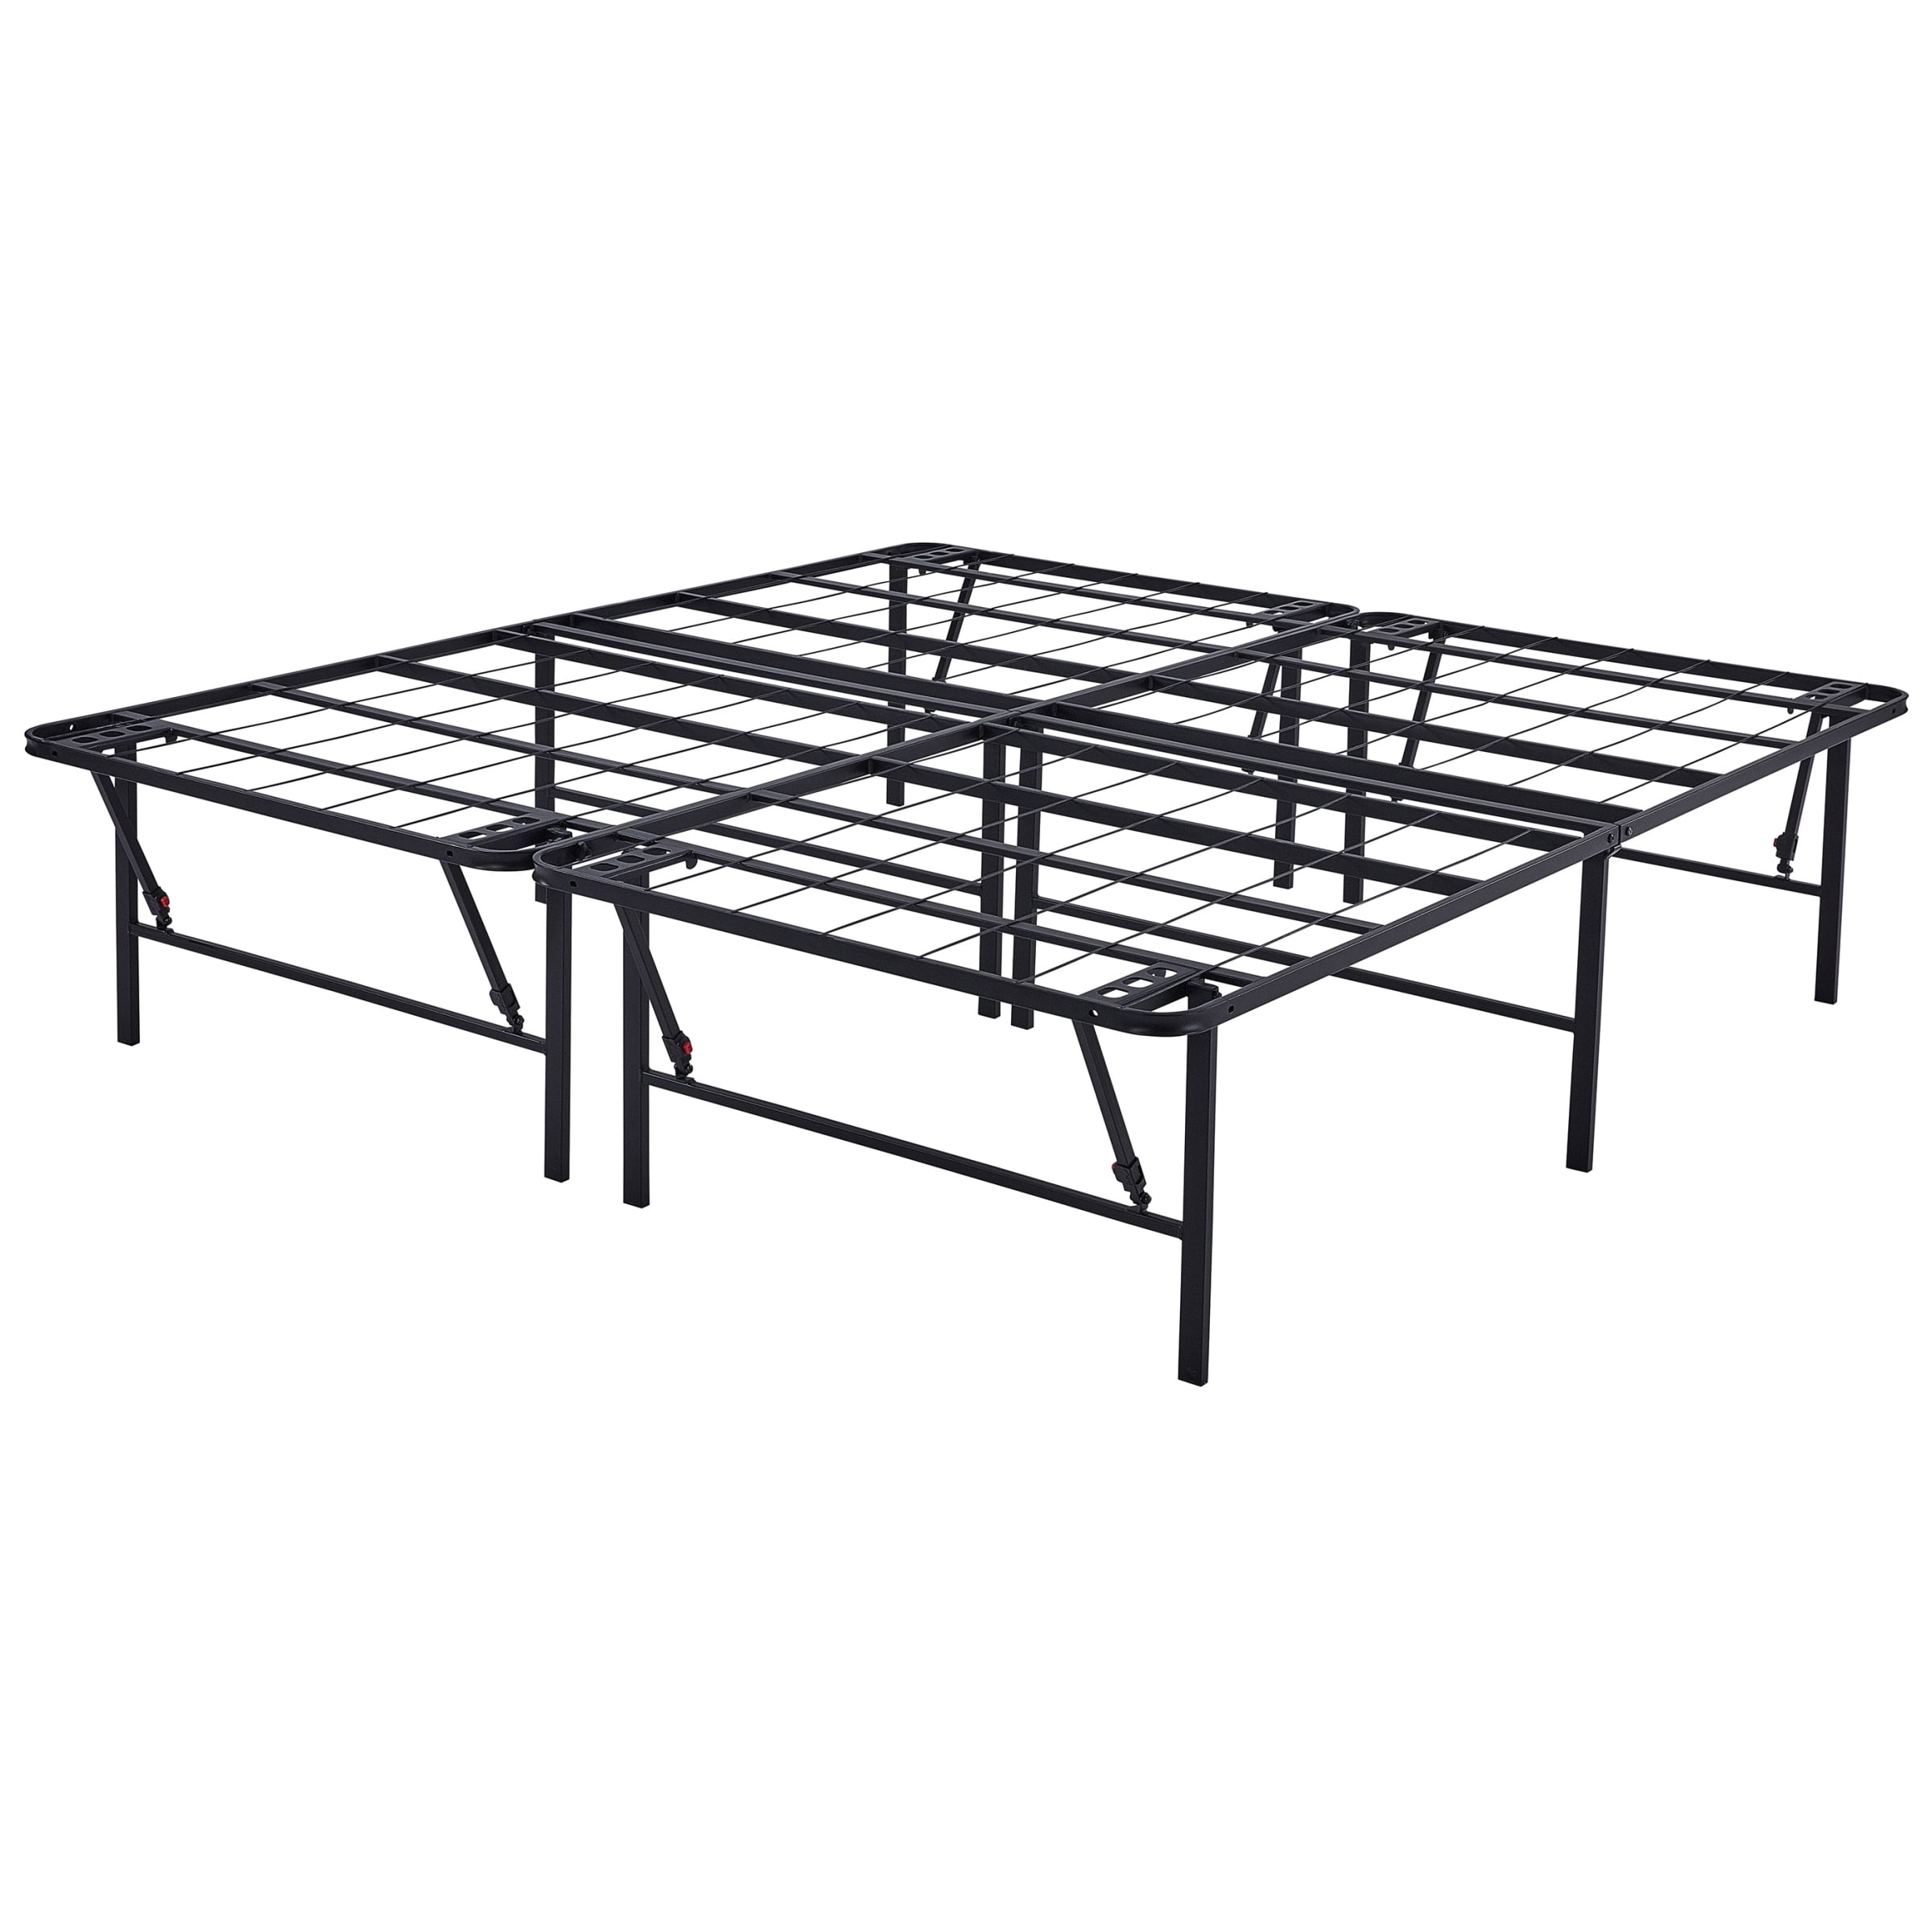 Profile Foldable Steel Bed Frame King, Mainstays High Profile Foldable Steel Bed Frame